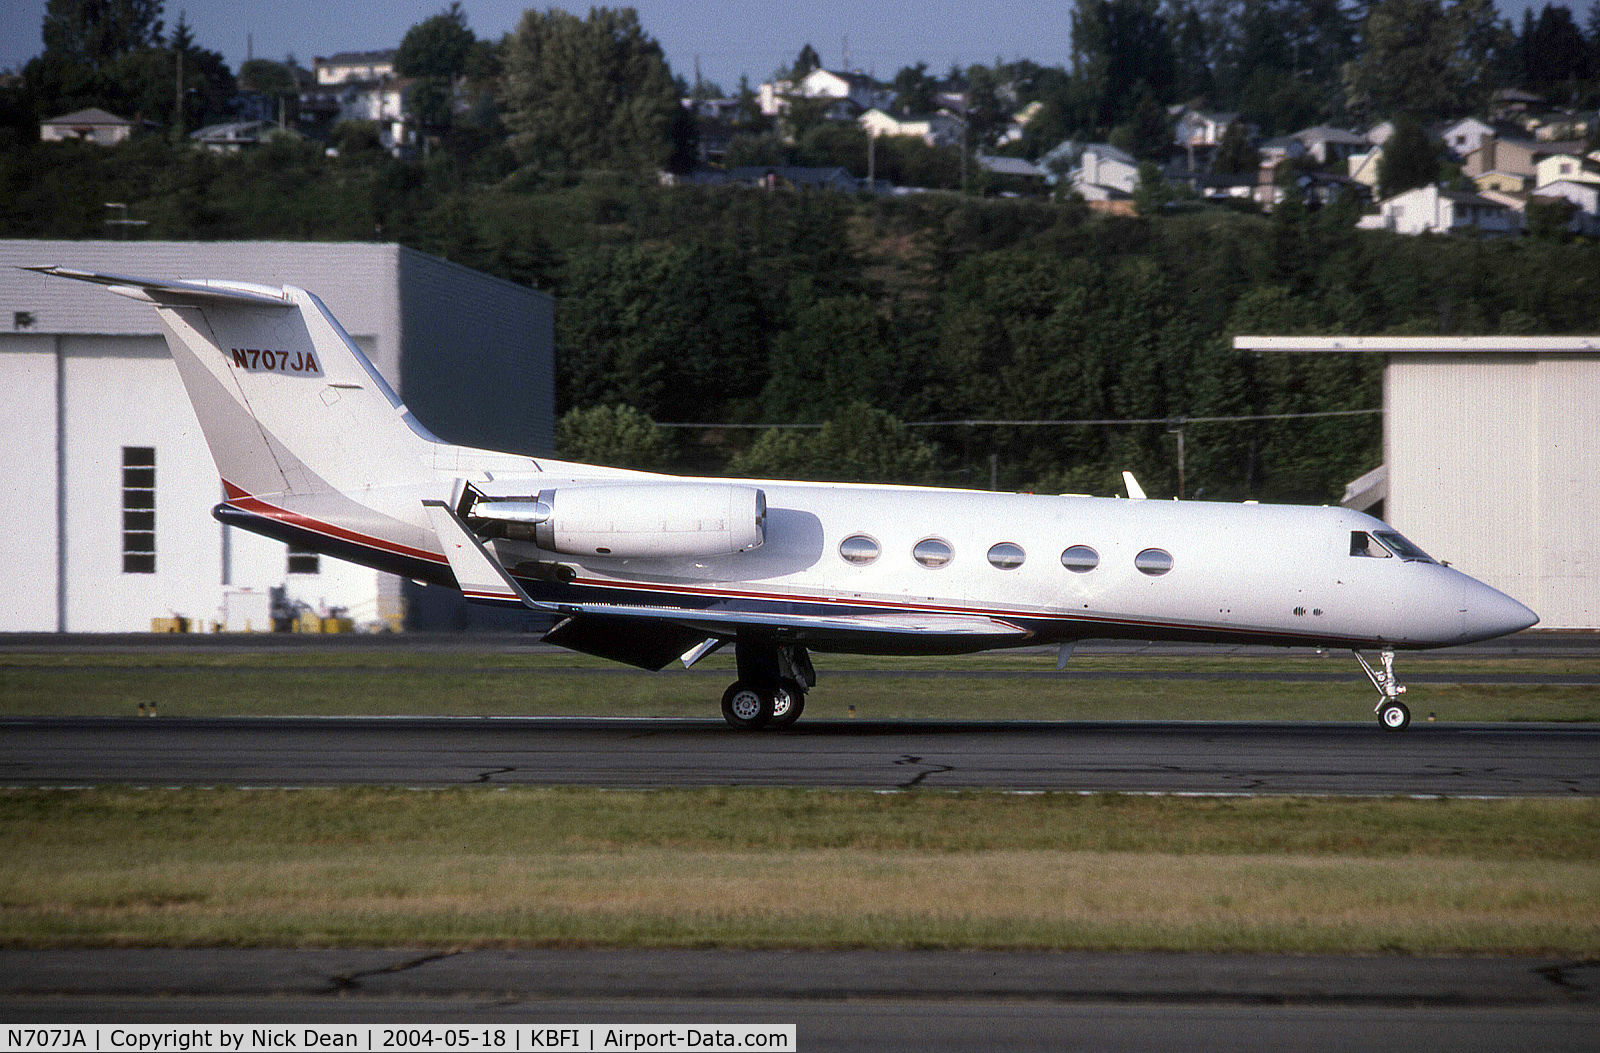 N707JA, 1984 Grumman G1159A Gulfstream III C/N 447, KBFI